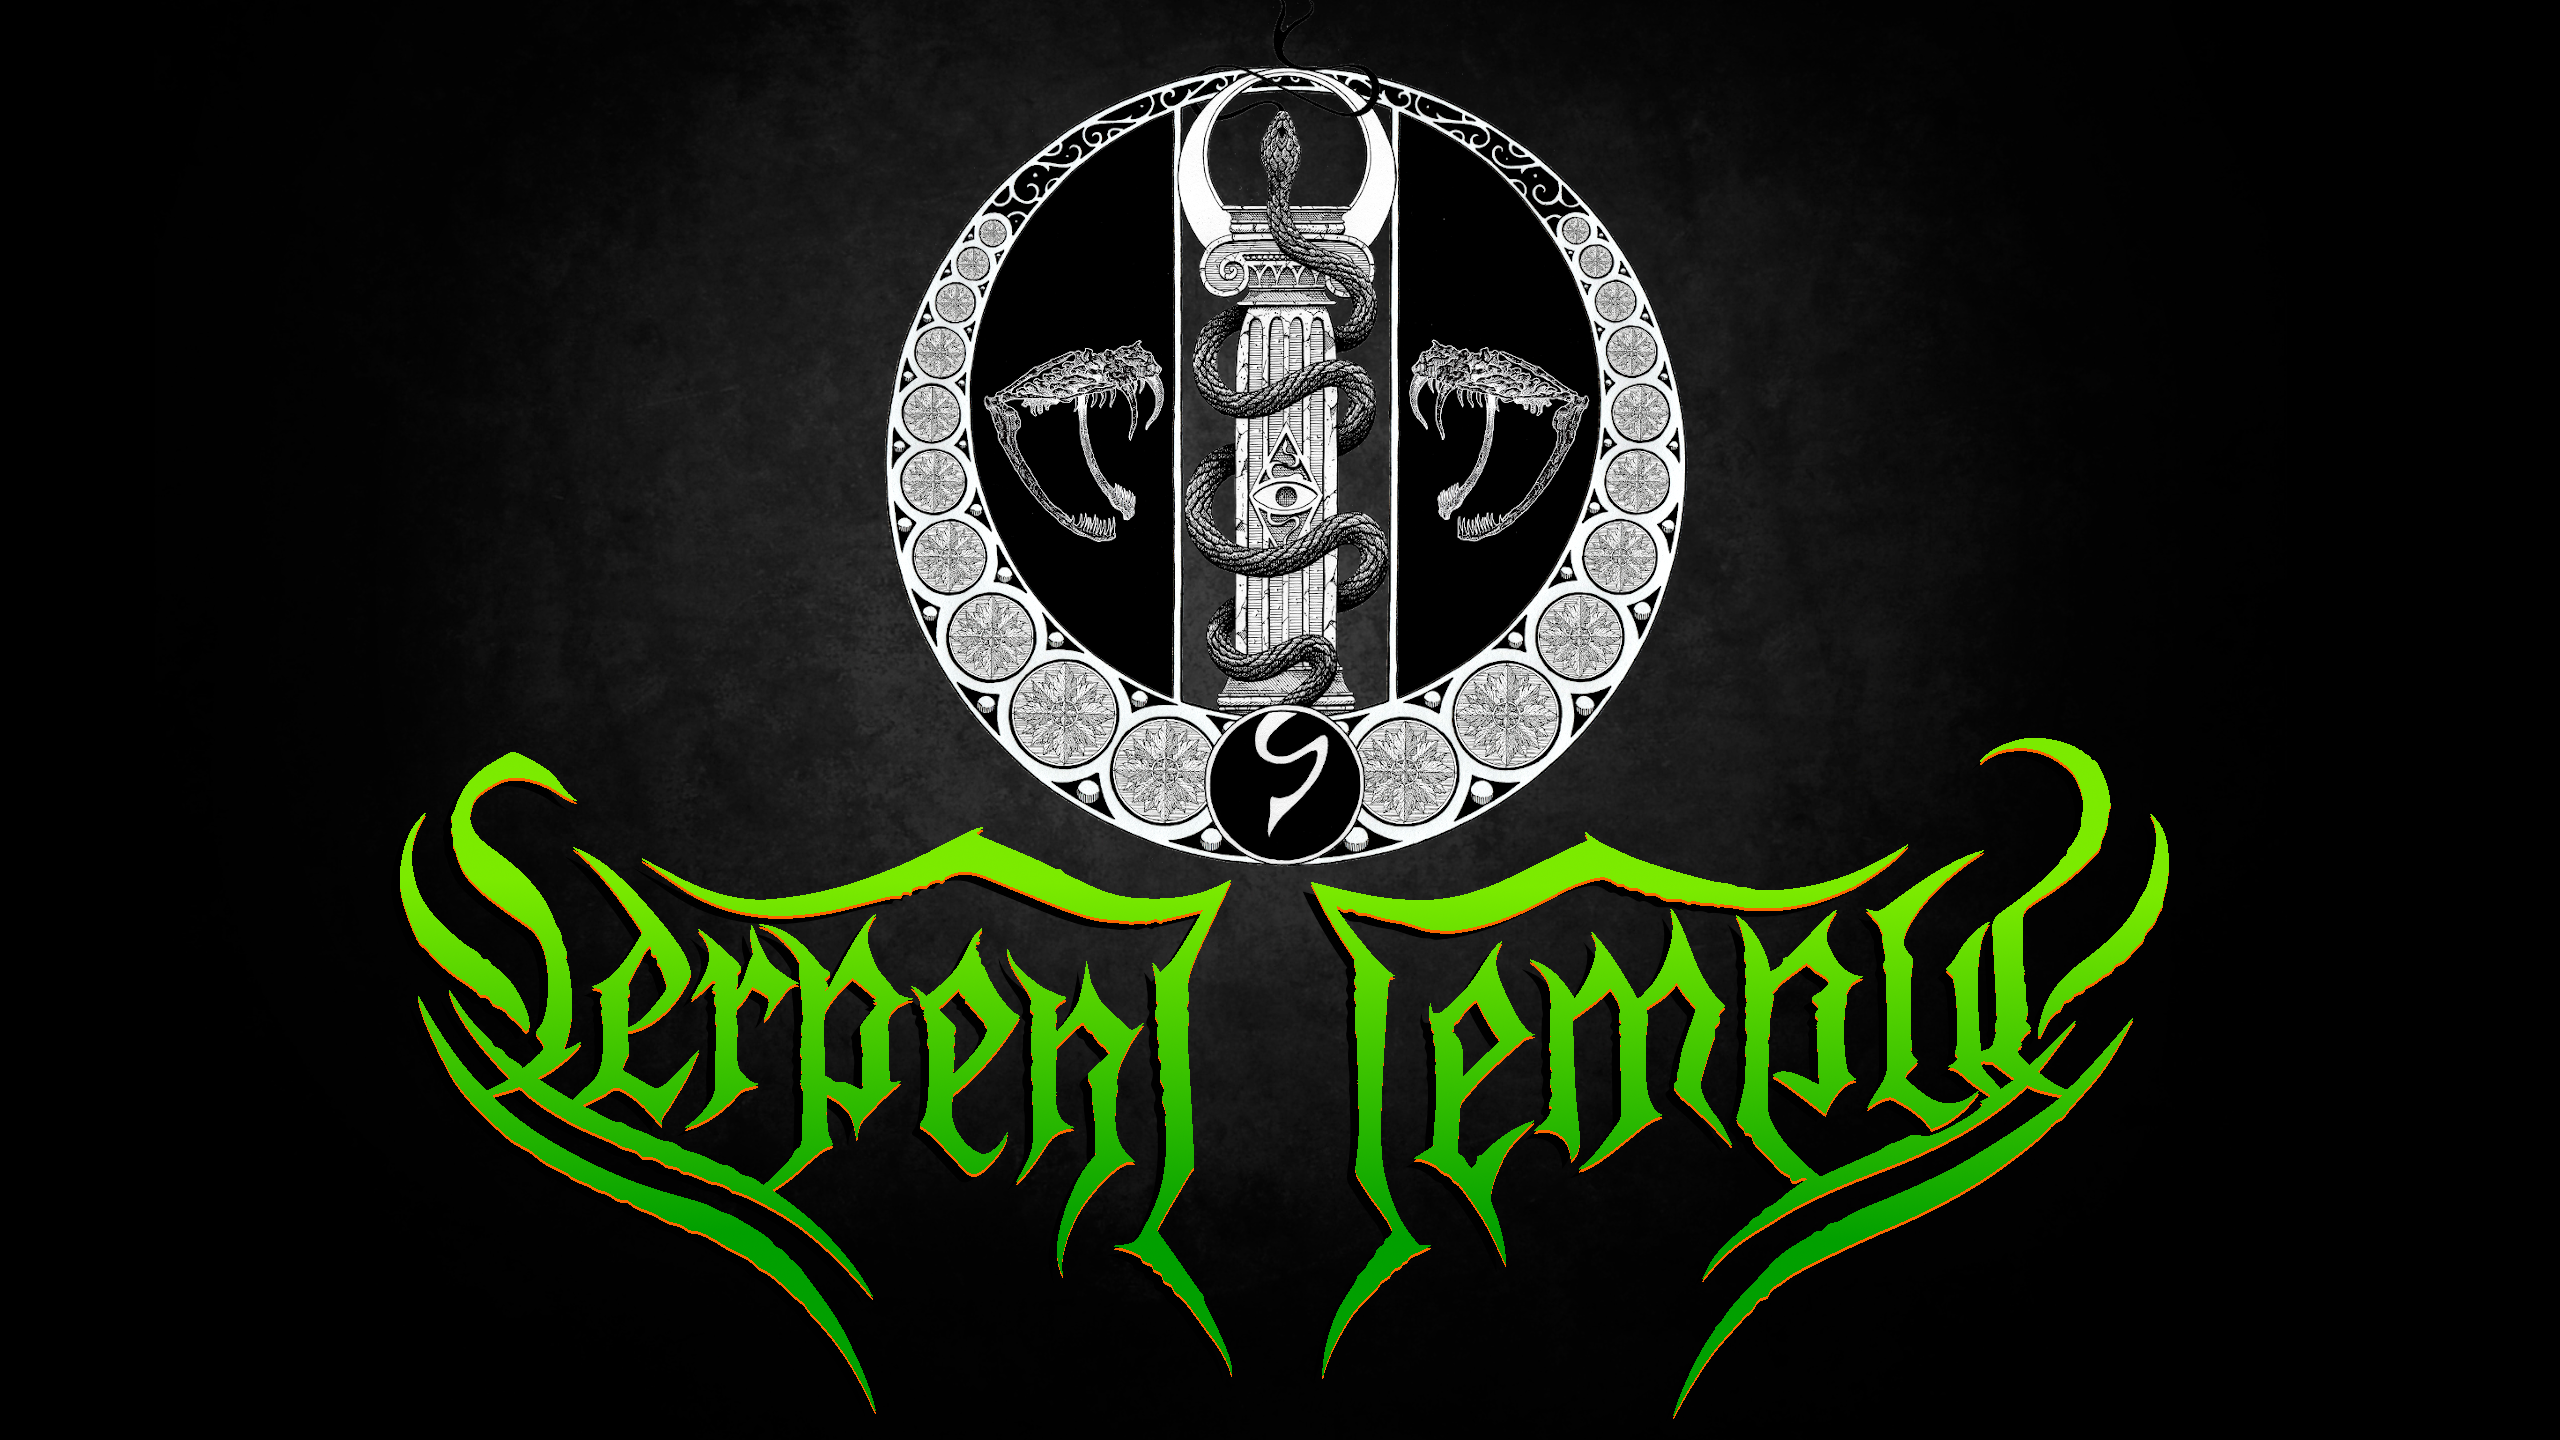 Serpent Temple